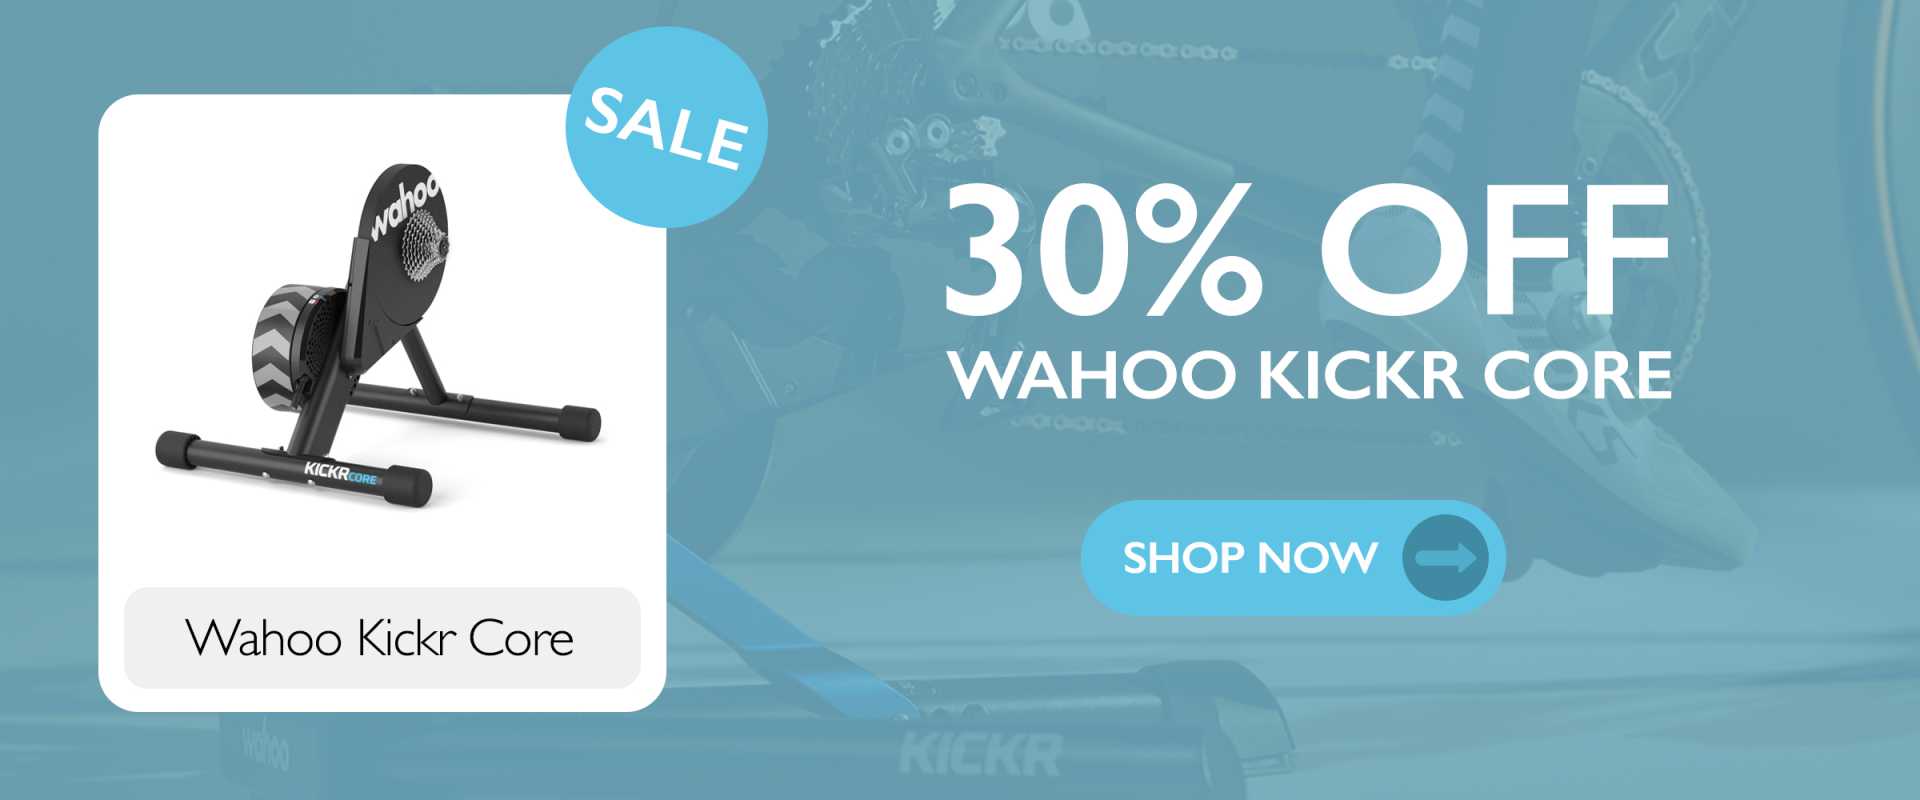 Wahoo Kickr Sale